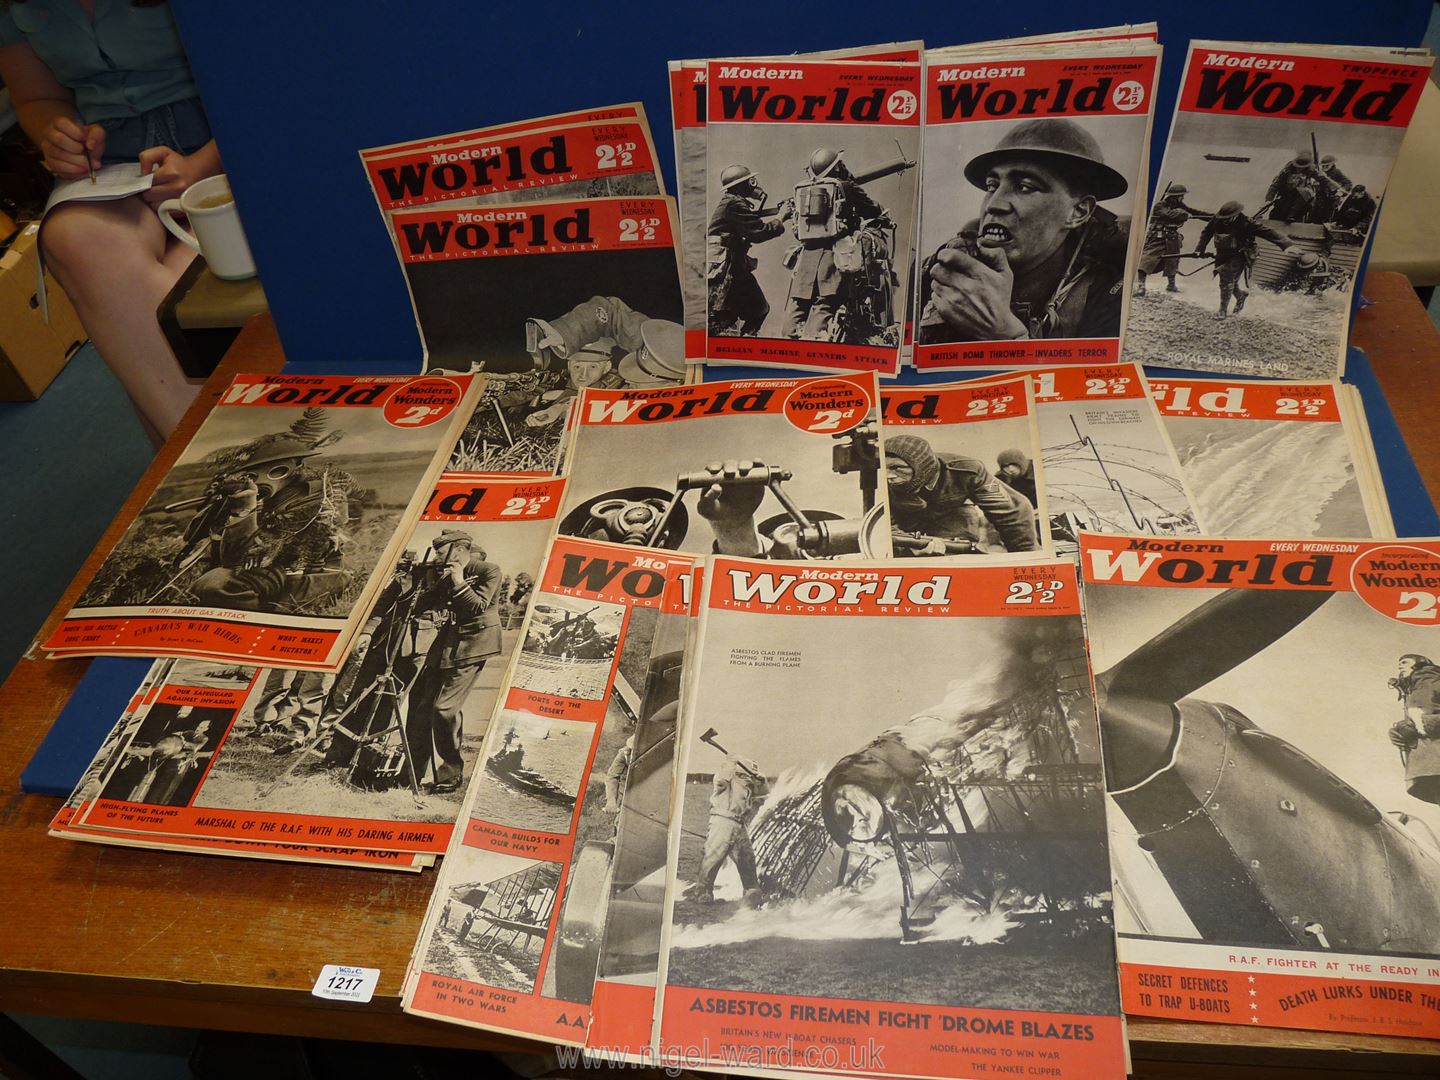 A quantity of WWII modern wonder magazine 1940-41, second series vol.